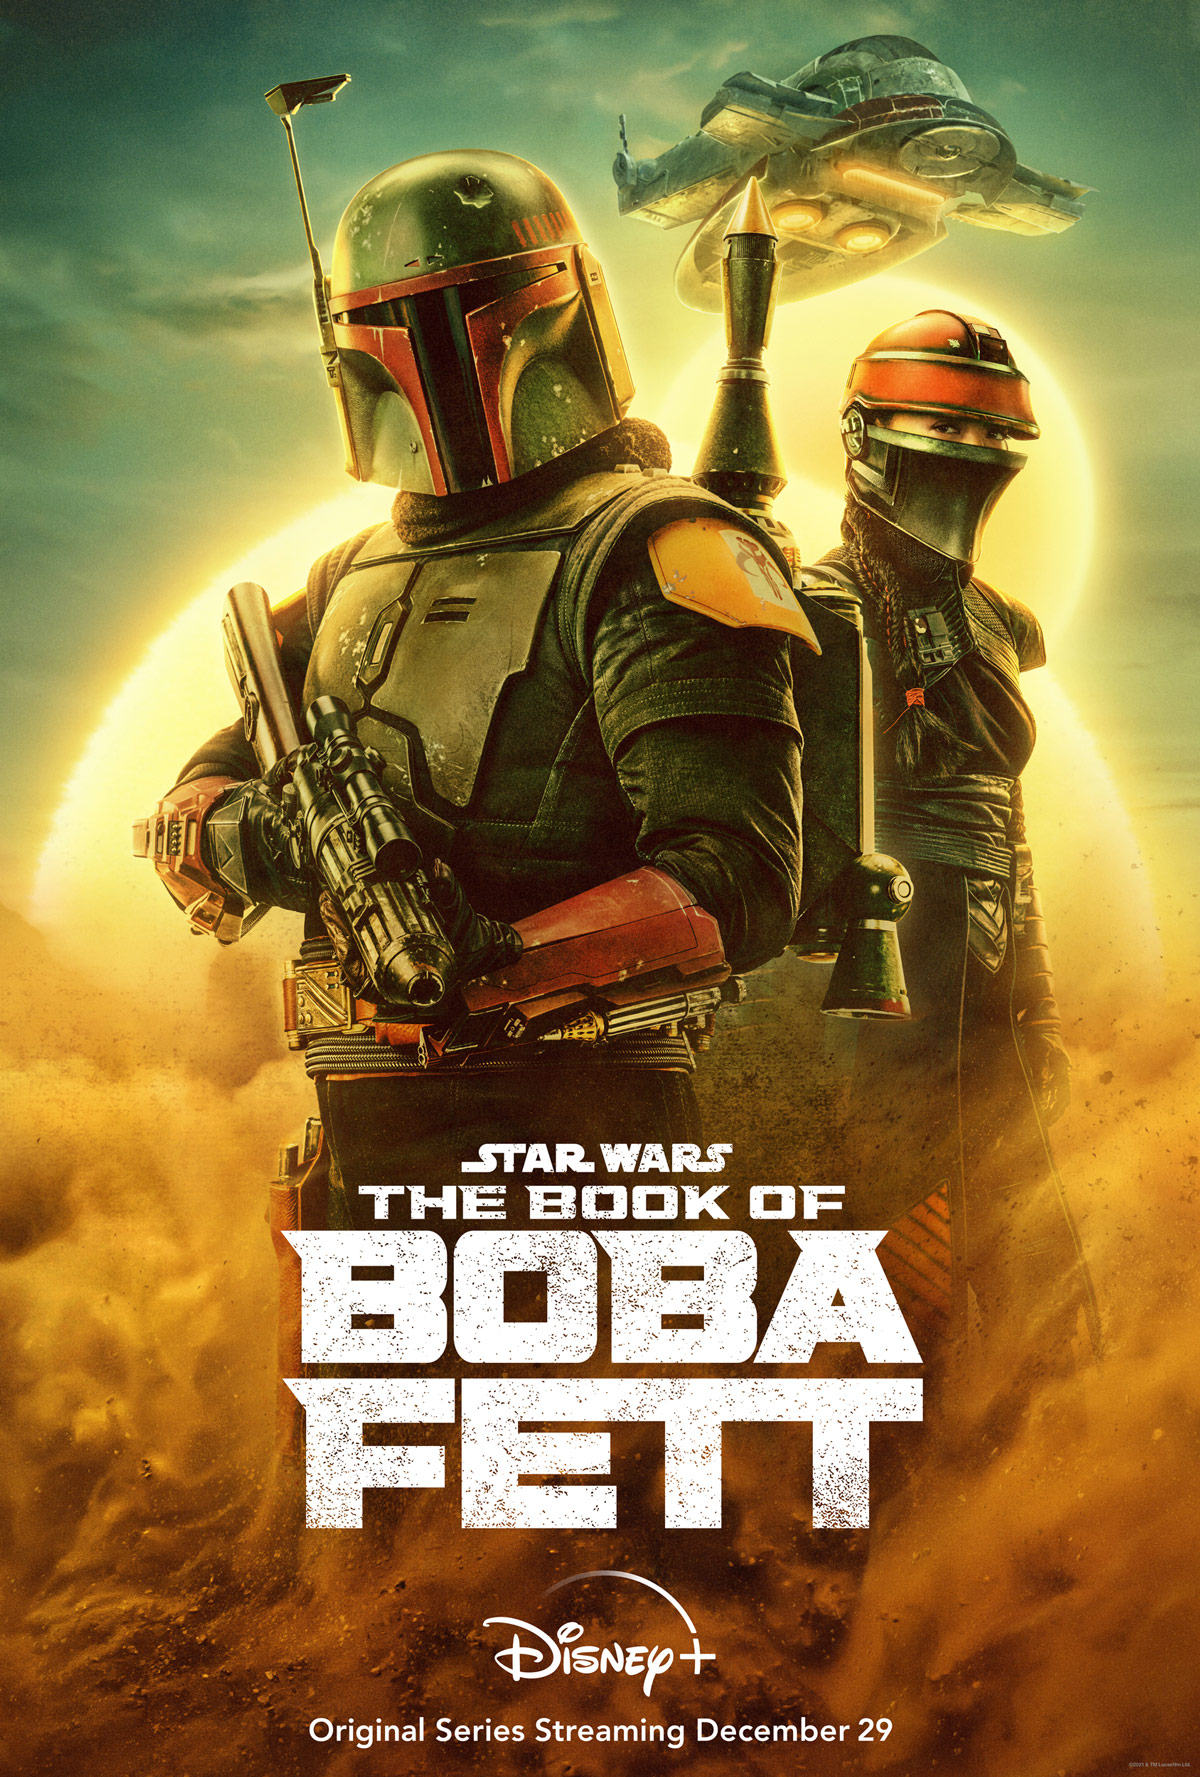 THE BOOK OF BOBA FETT trailer – Temuera Morrison headlines the Disney+ Star Wars series